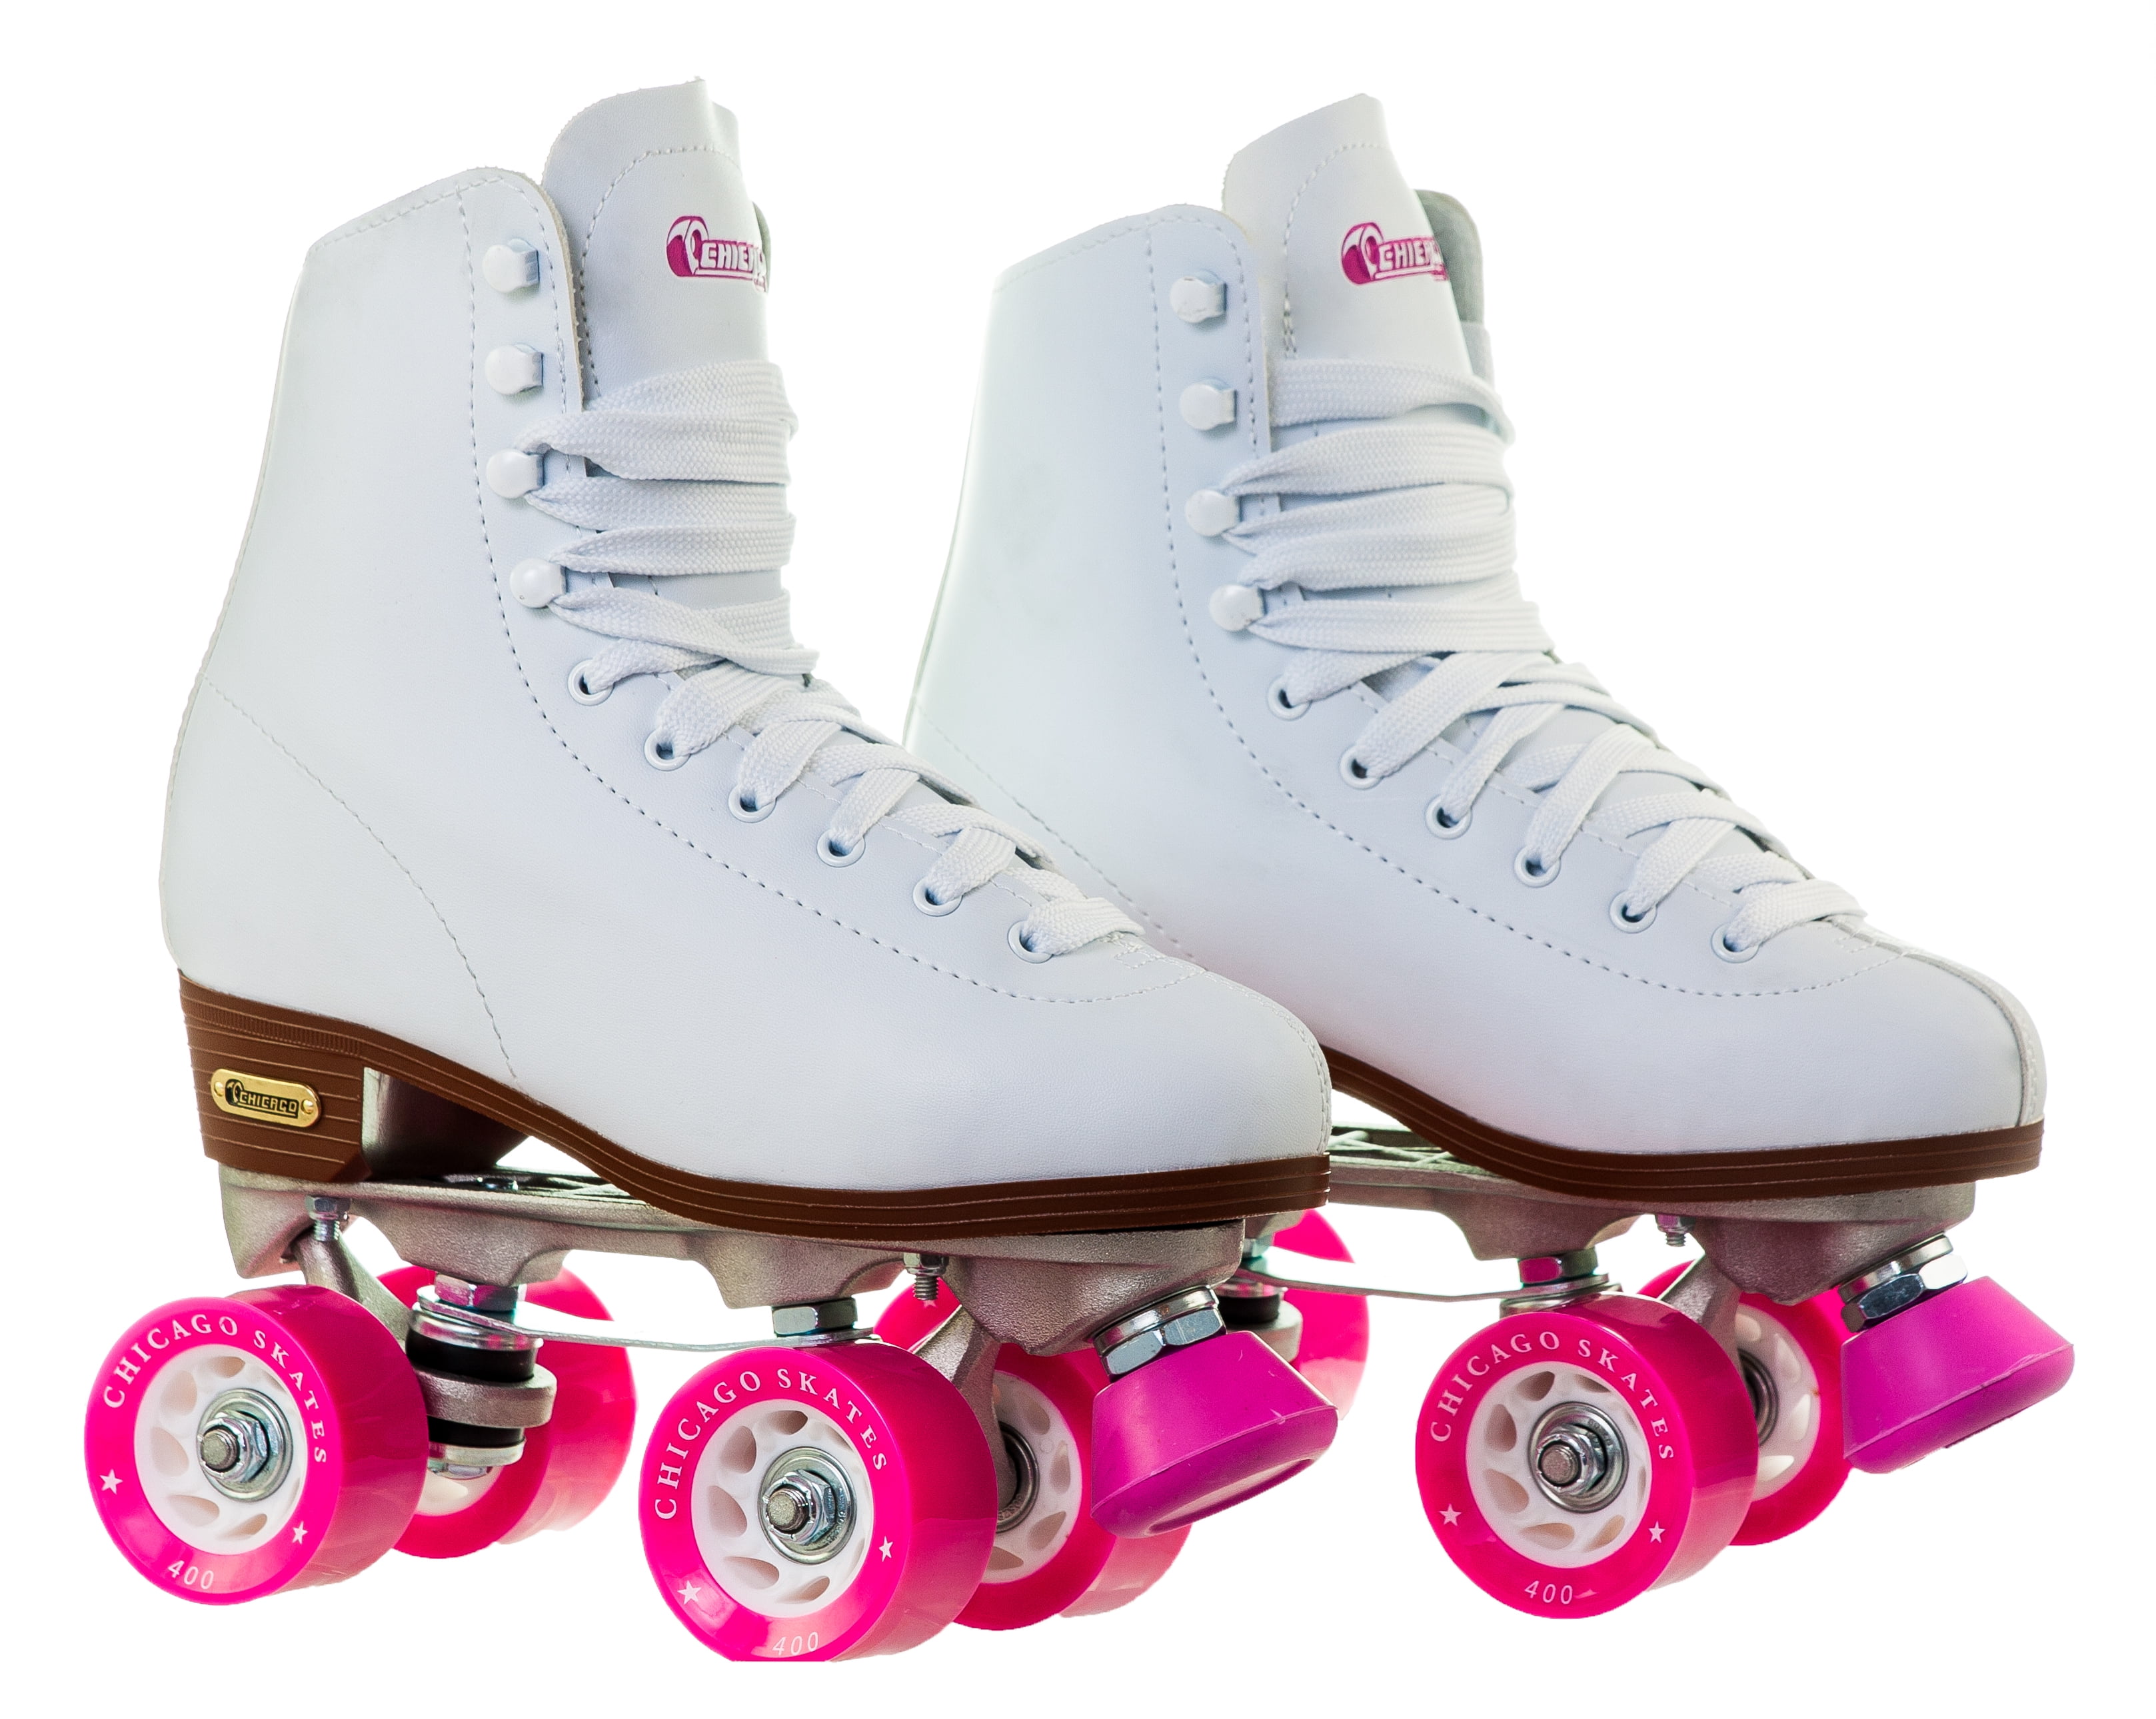 For Indoor Skating Chicago 800 White High Top Women’s Roller Skates 